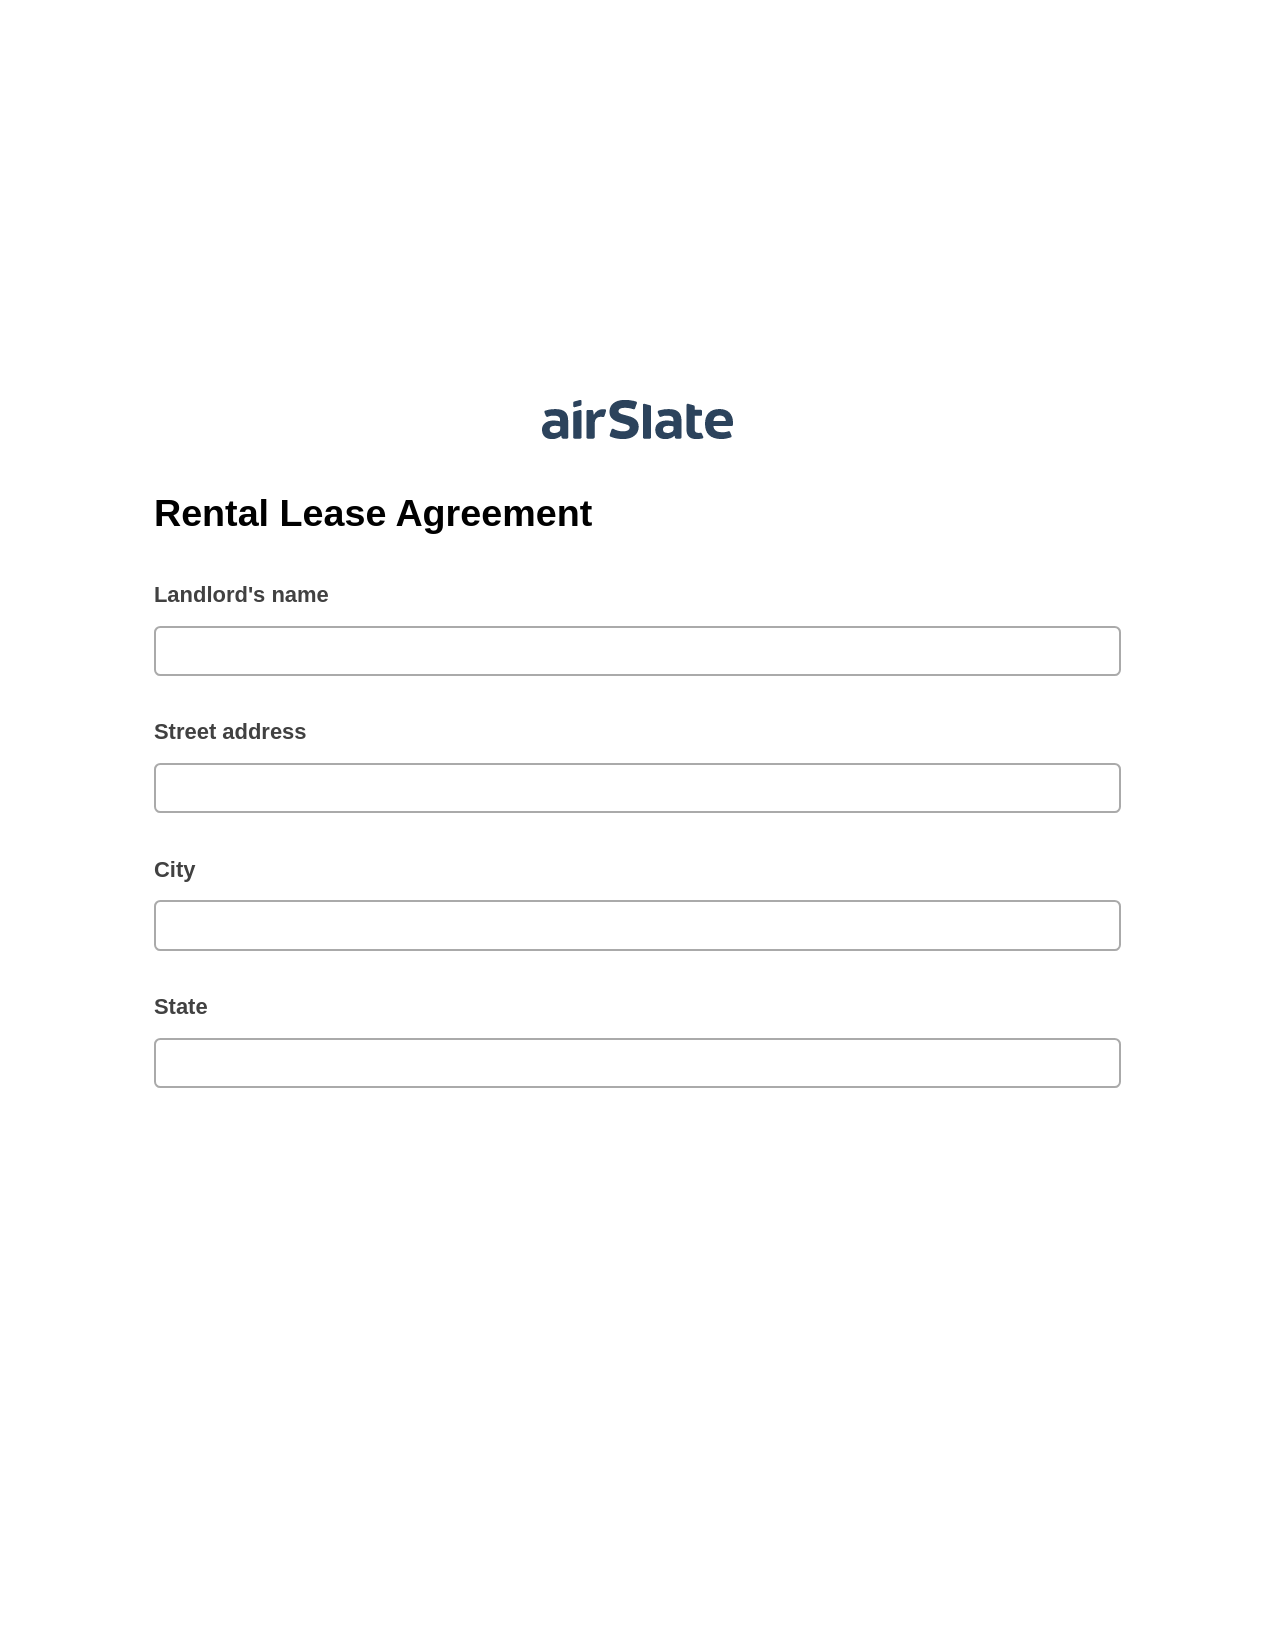 Multirole Rental Lease Agreement Pre-fill from MySQL Dropdown Options Bot, Update NetSuite Records Bot, OneDrive Bot